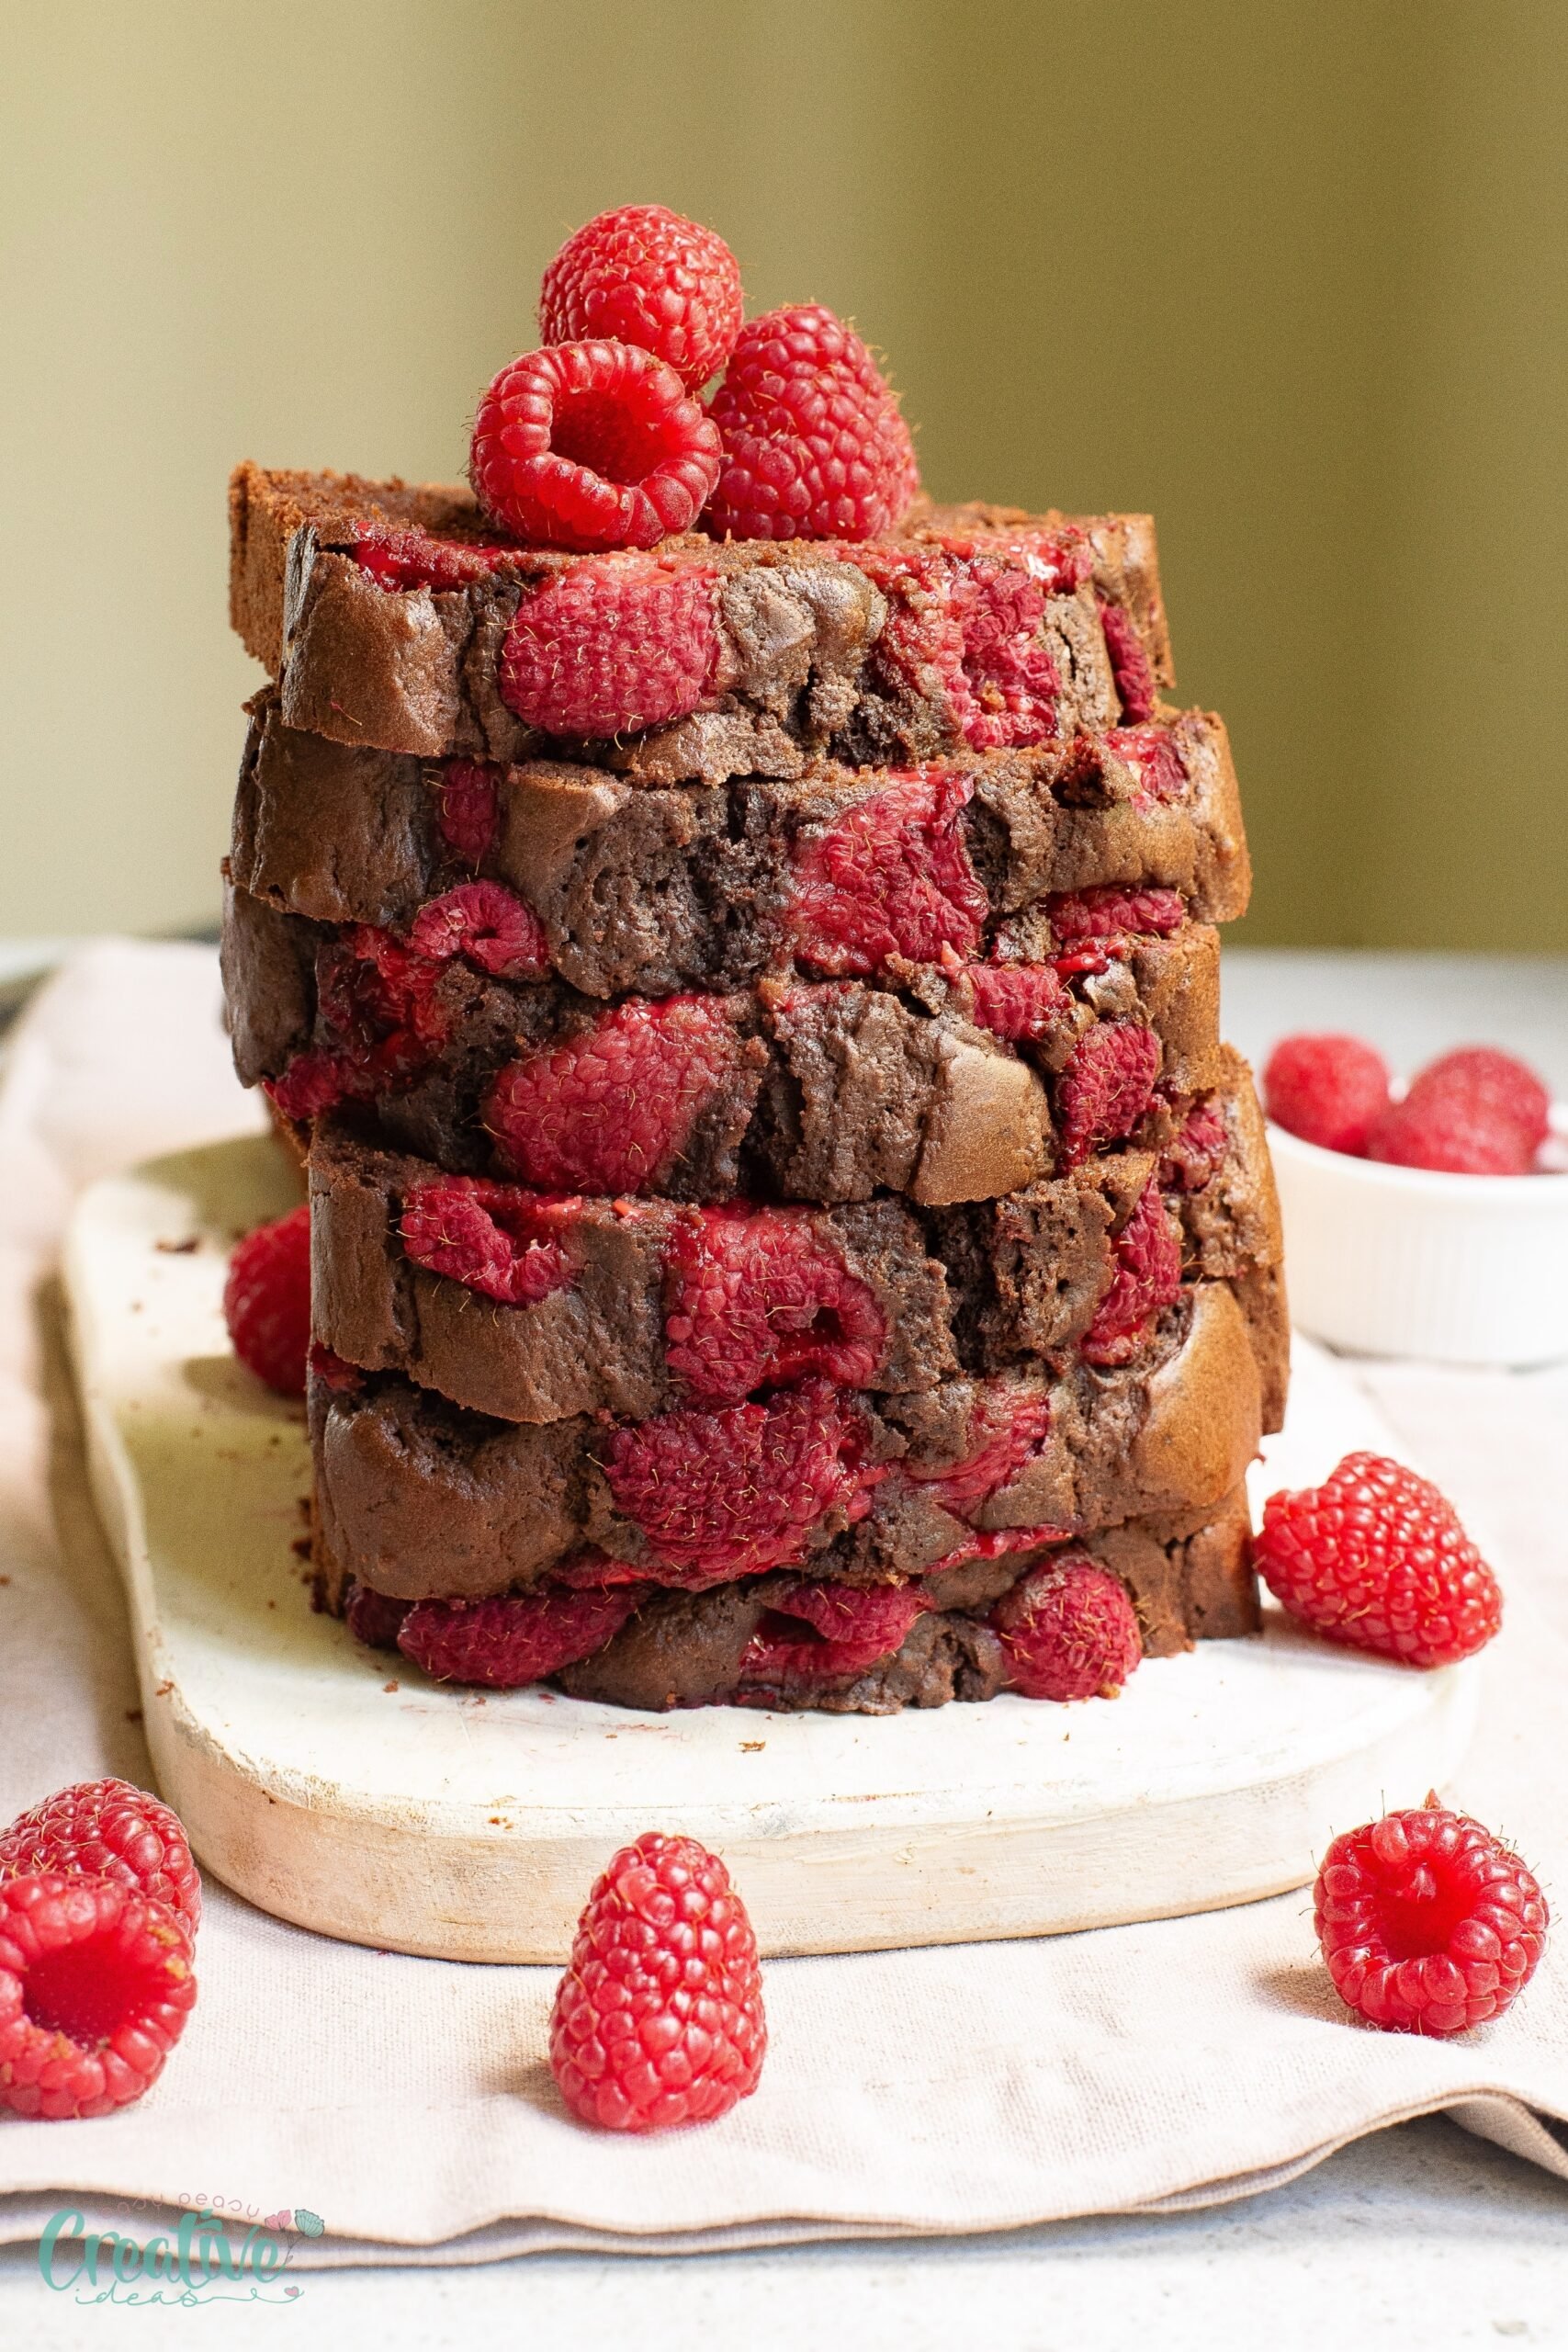 Chocolate pound cake recipe with raspberries